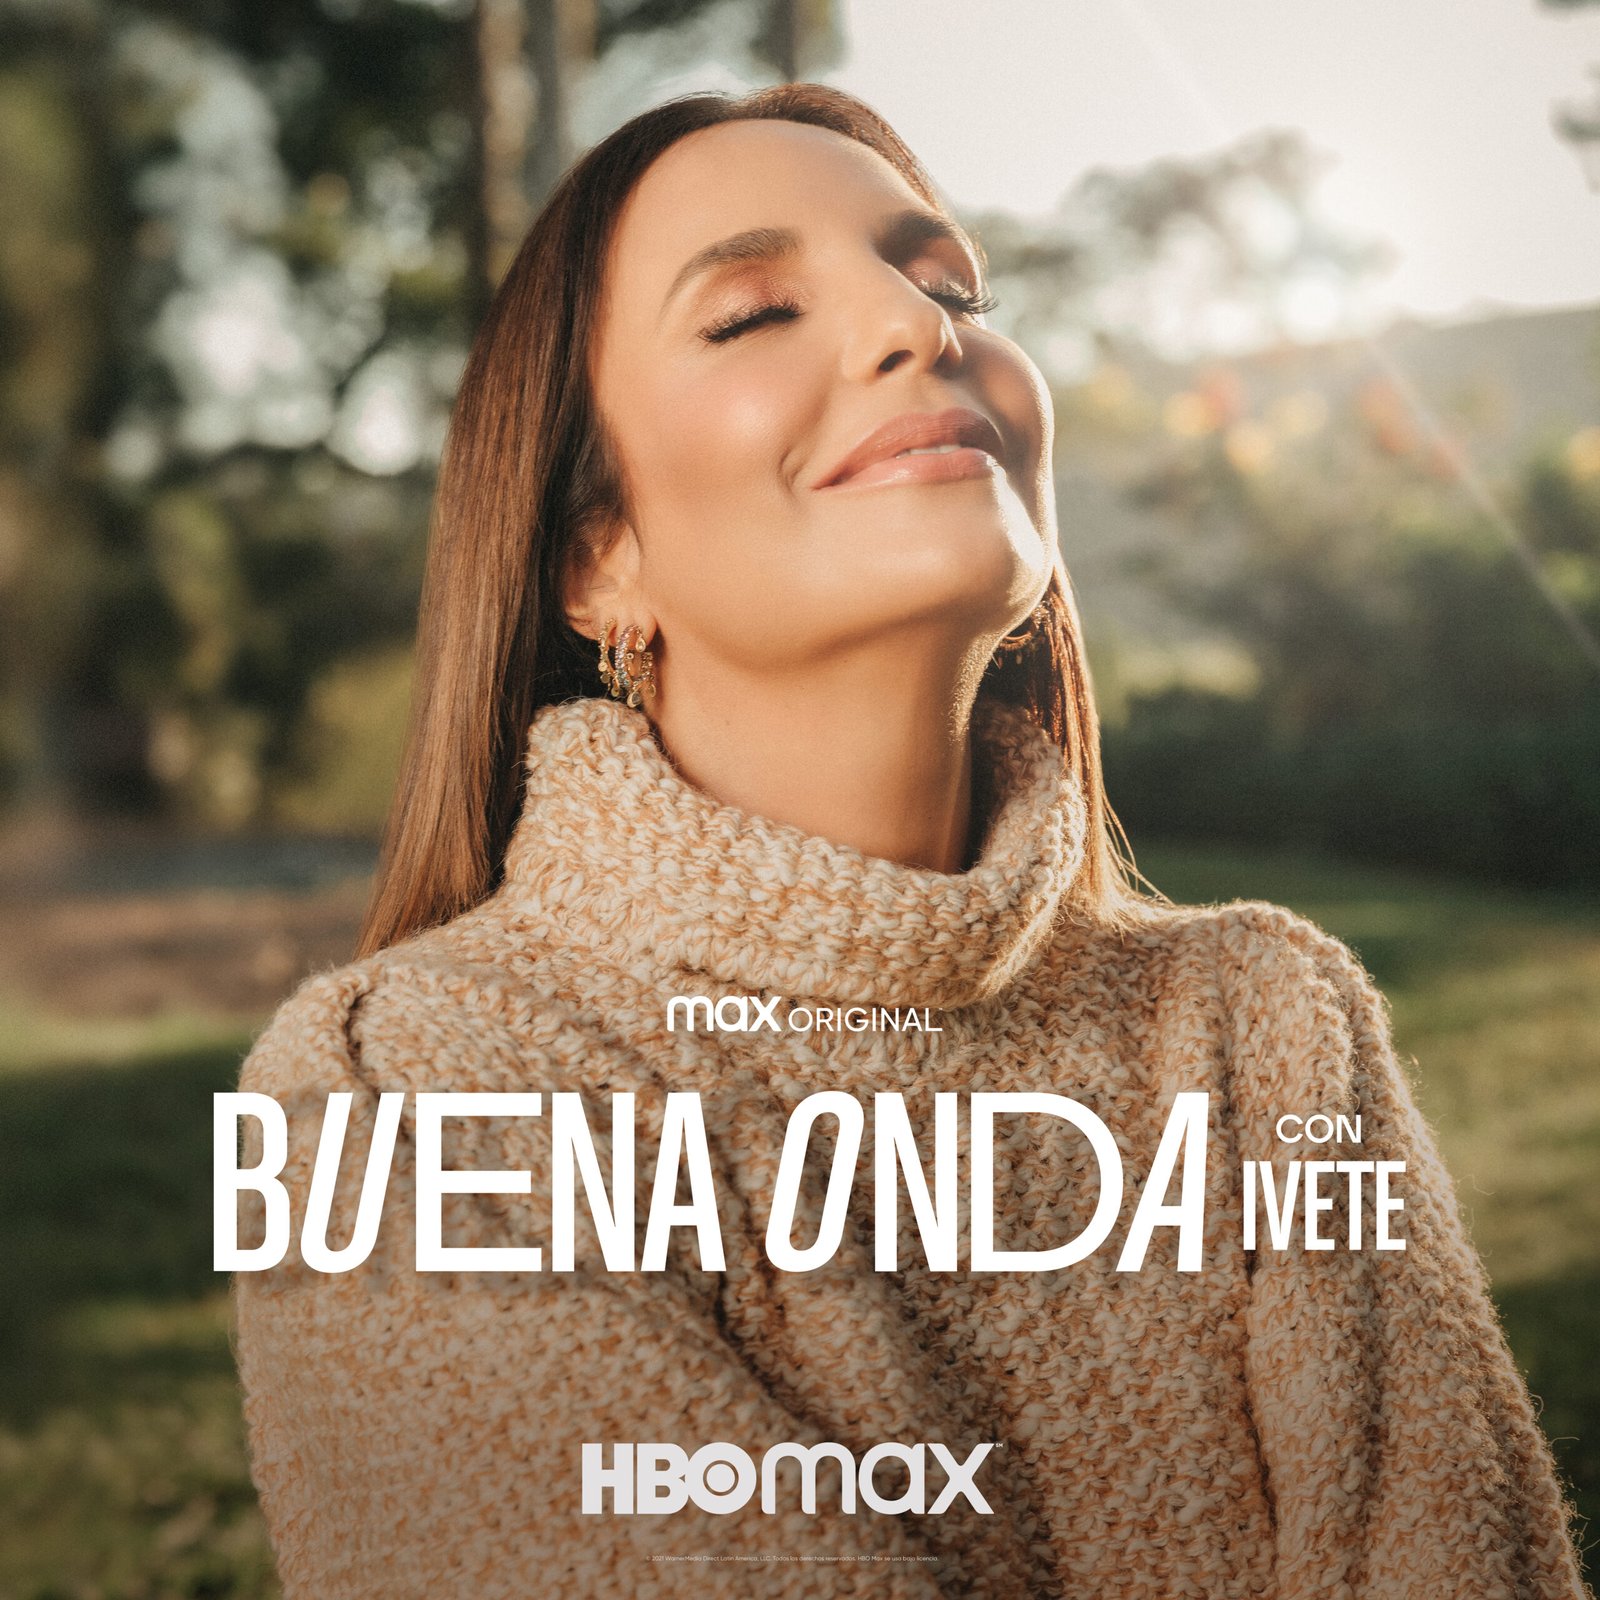 HBO MAX ANUNCIA “BUENA ONDA CON IVETE”, SERIE DOCUMENTAL DE IVETE SANGALO